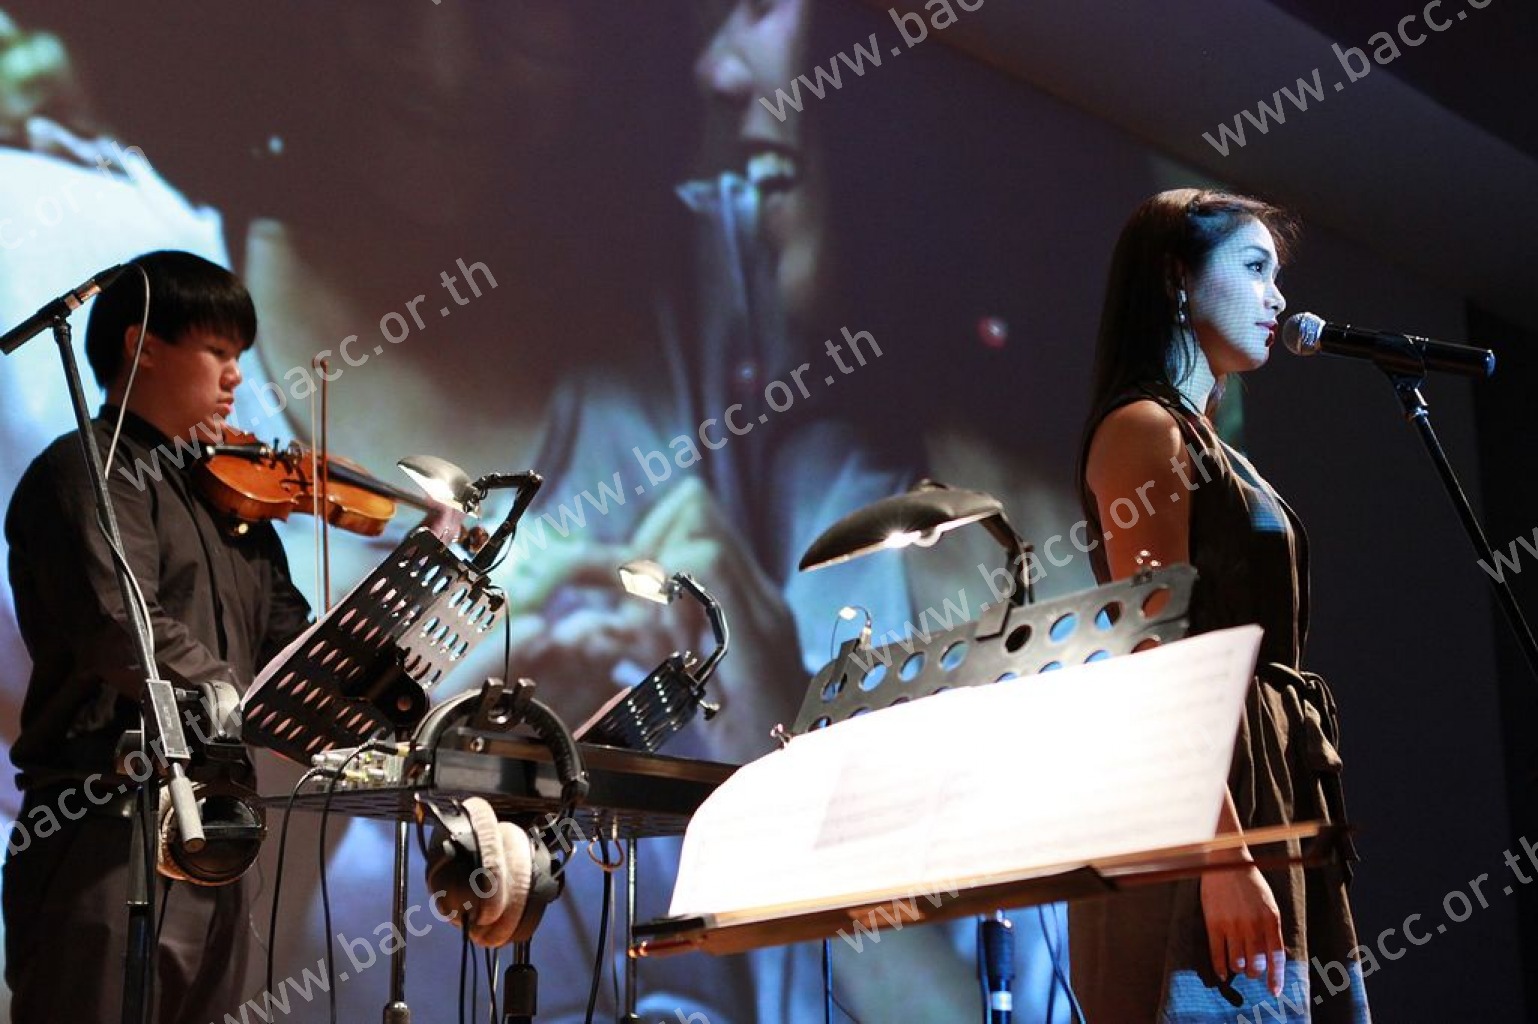 Bangkok Music Forum ครั้งที่ 7 : ดนตรีประกอบภาพยนตร์ 